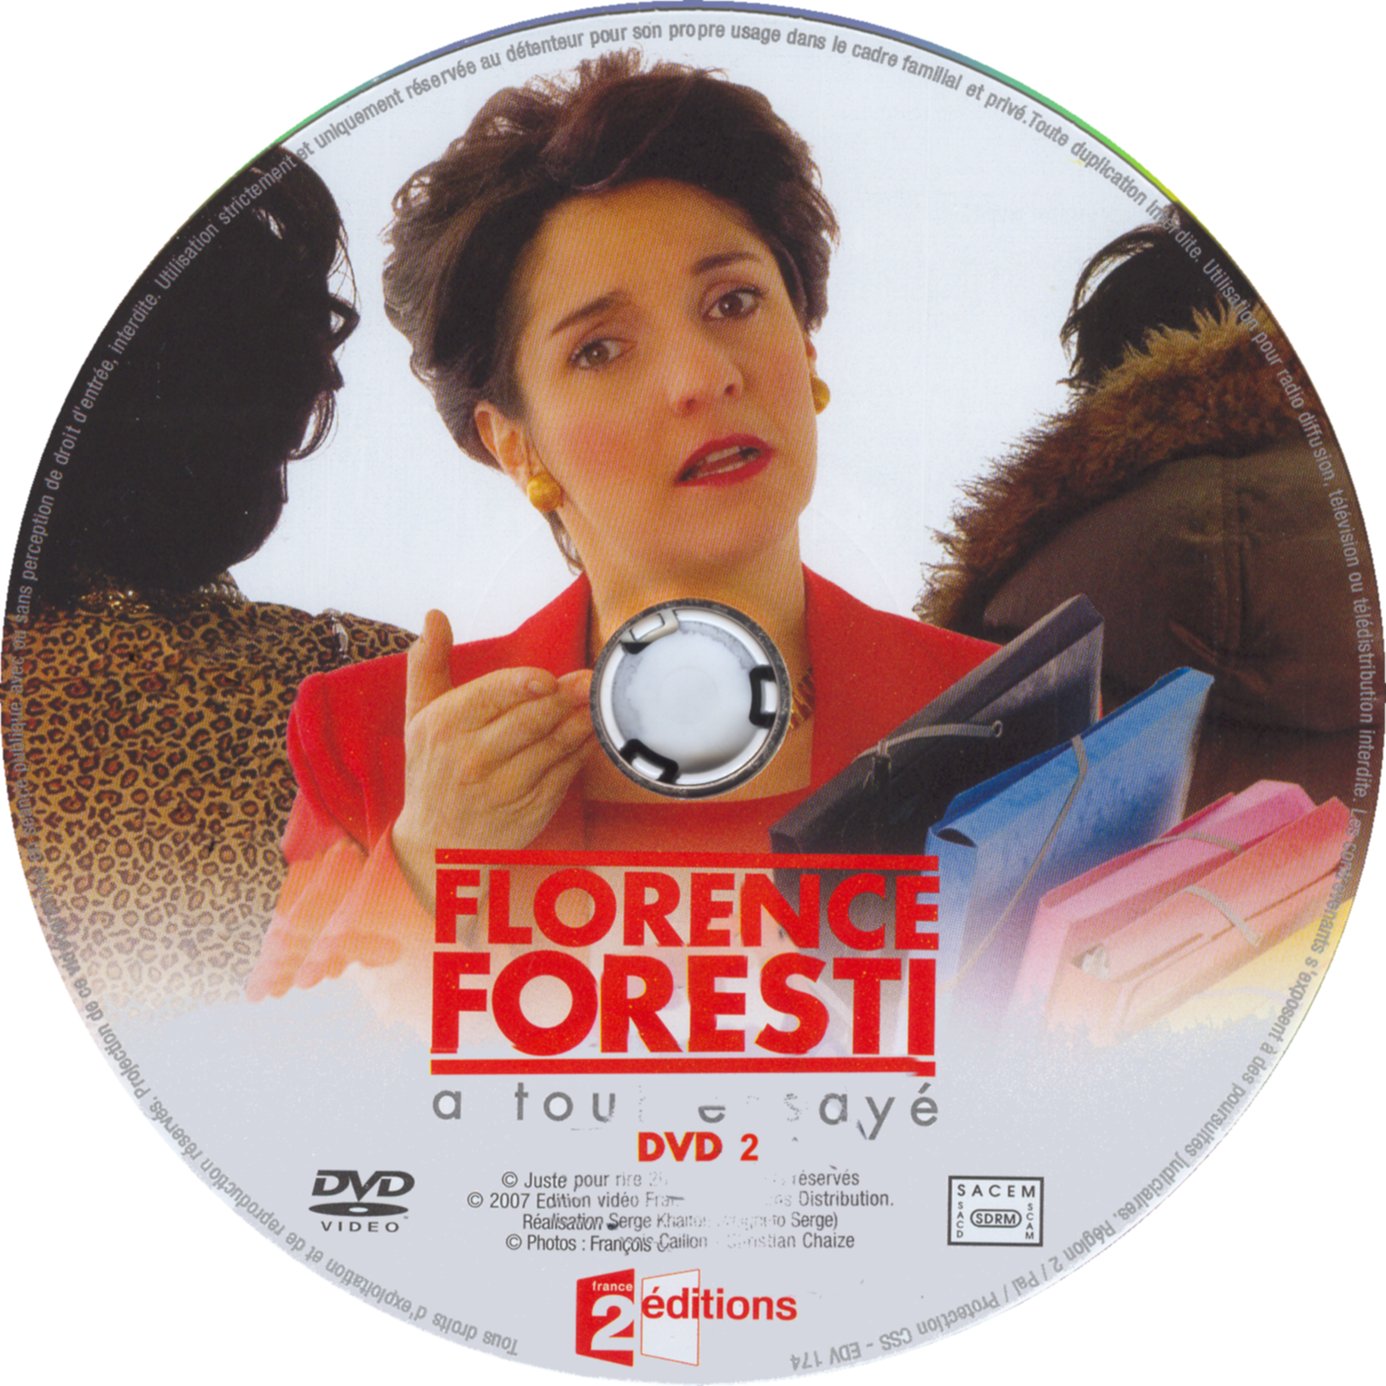 Download florence foresti a tout essay DVDRIP TRUEFRENCH sur uptobox, 1Fichier, uploaded